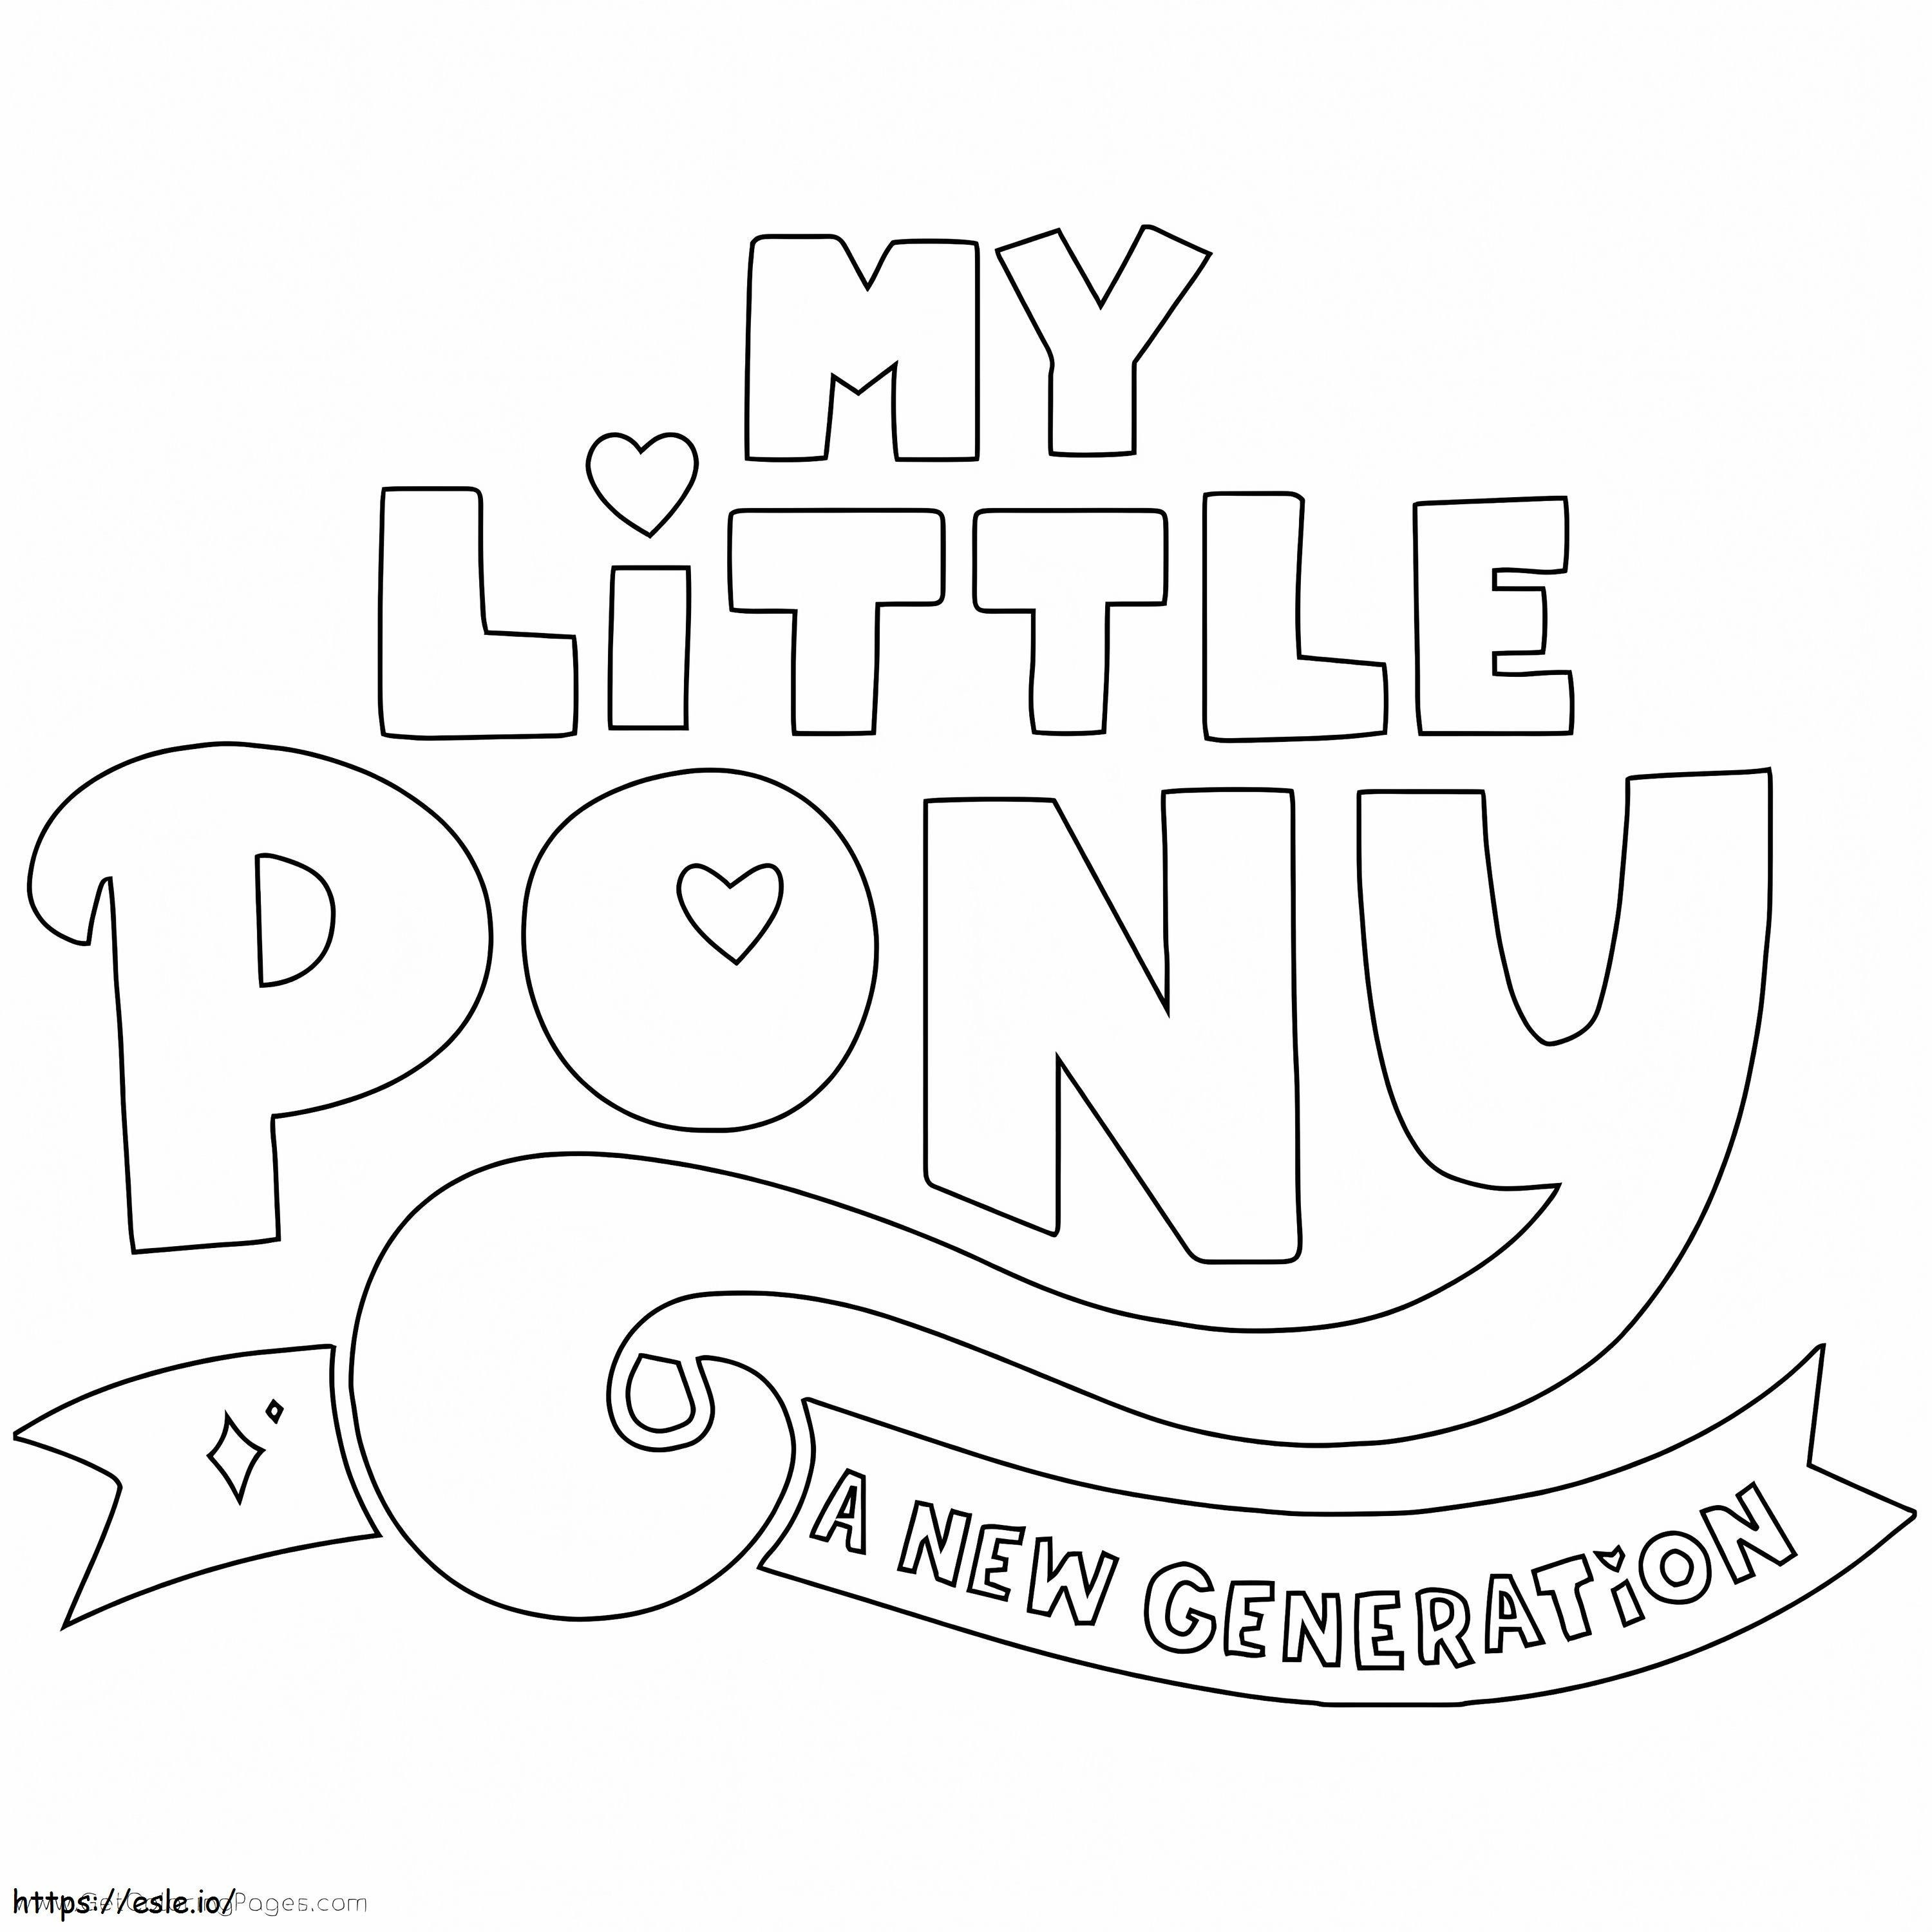 Logo My Little Pony Generasi Baru Gambar Mewarnai